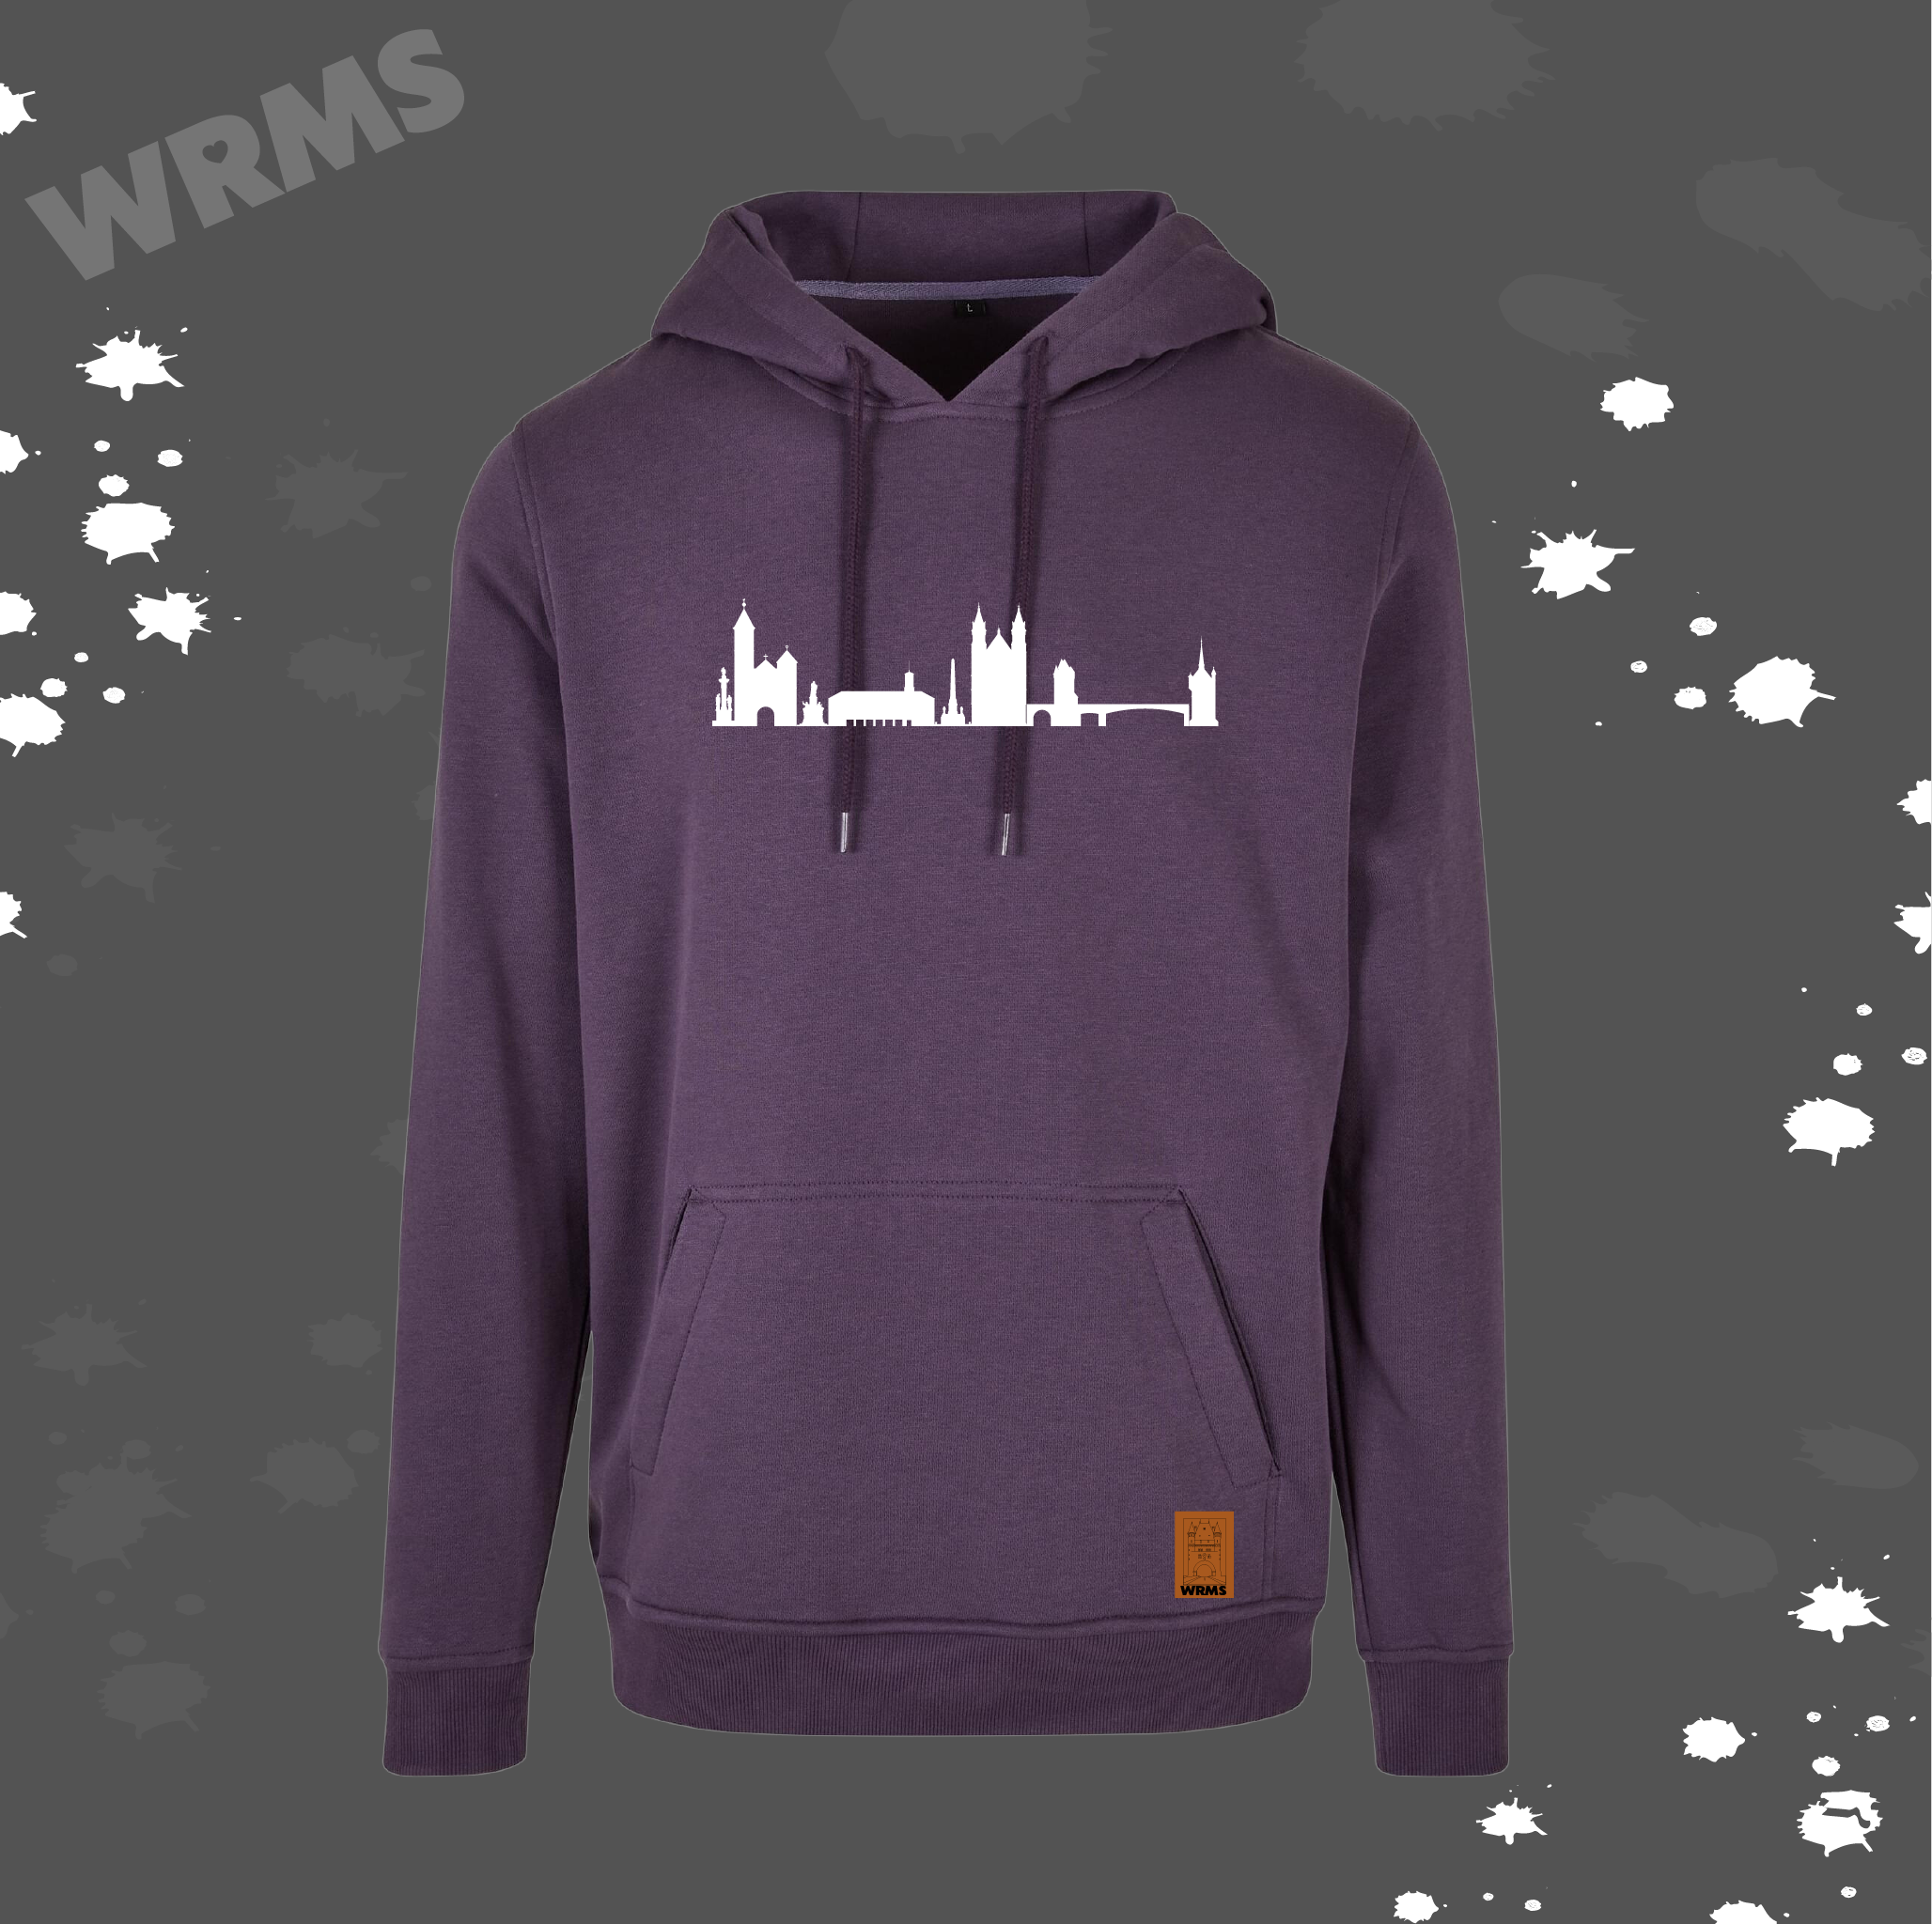 WRMS Skyline Huddie uni purple